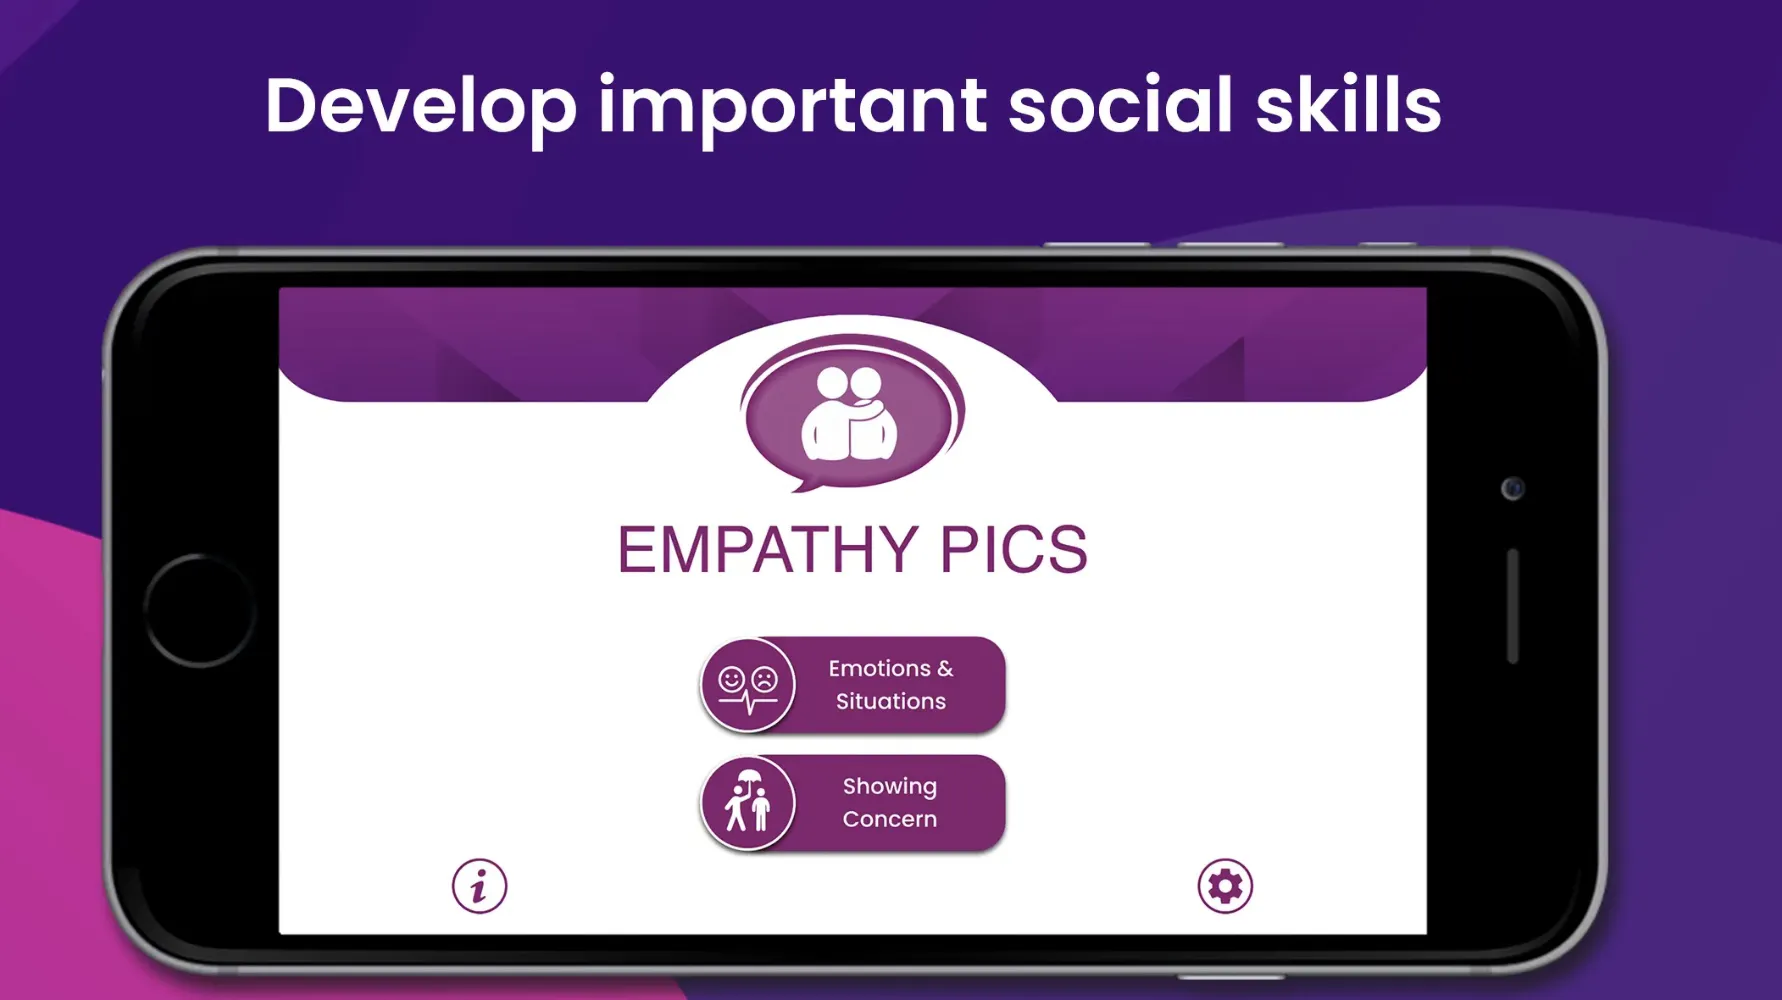 13 Best Social Skills Apps To Develop Important Social Skills